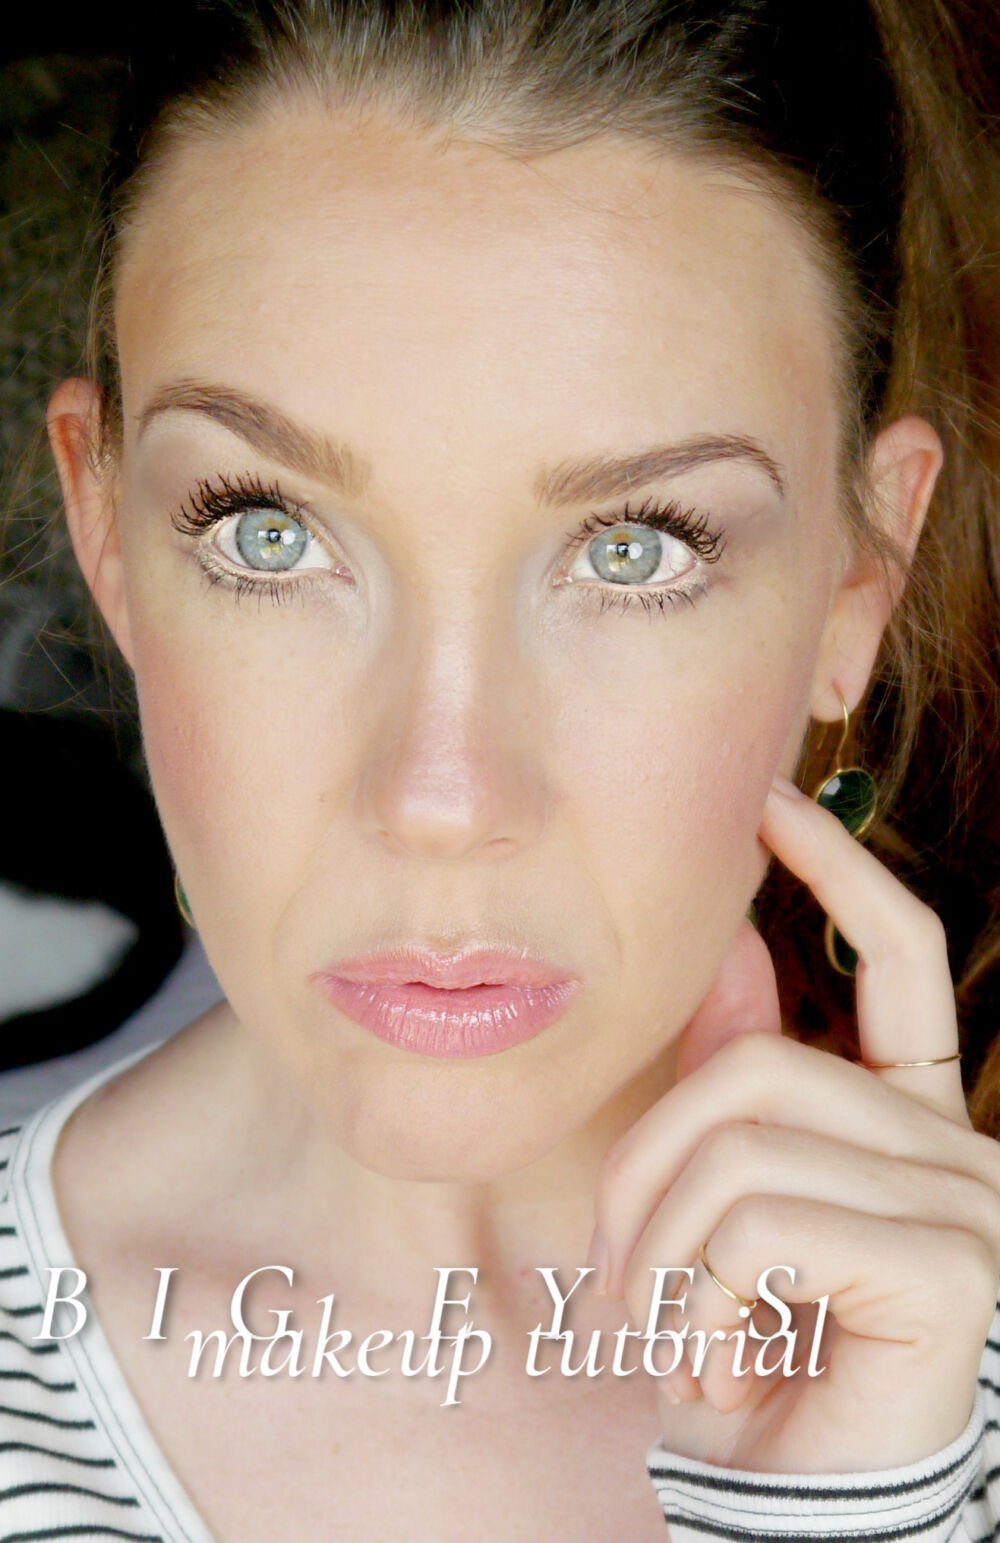 Big Eyes makeup tutorial